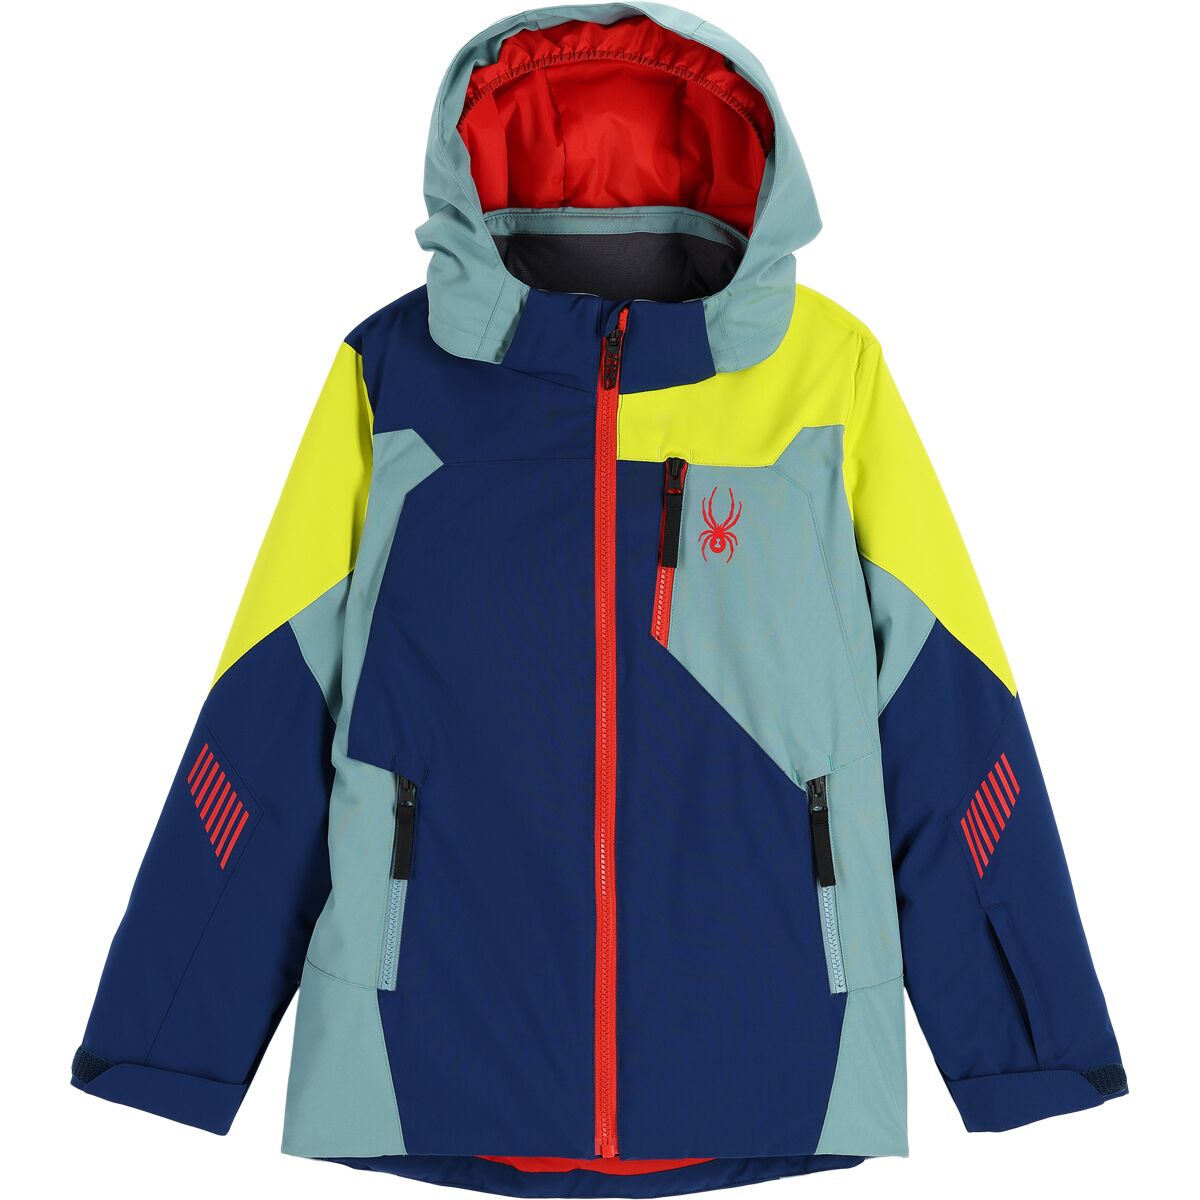 Spyder Leader Insulated Ski Jacket - Boys'